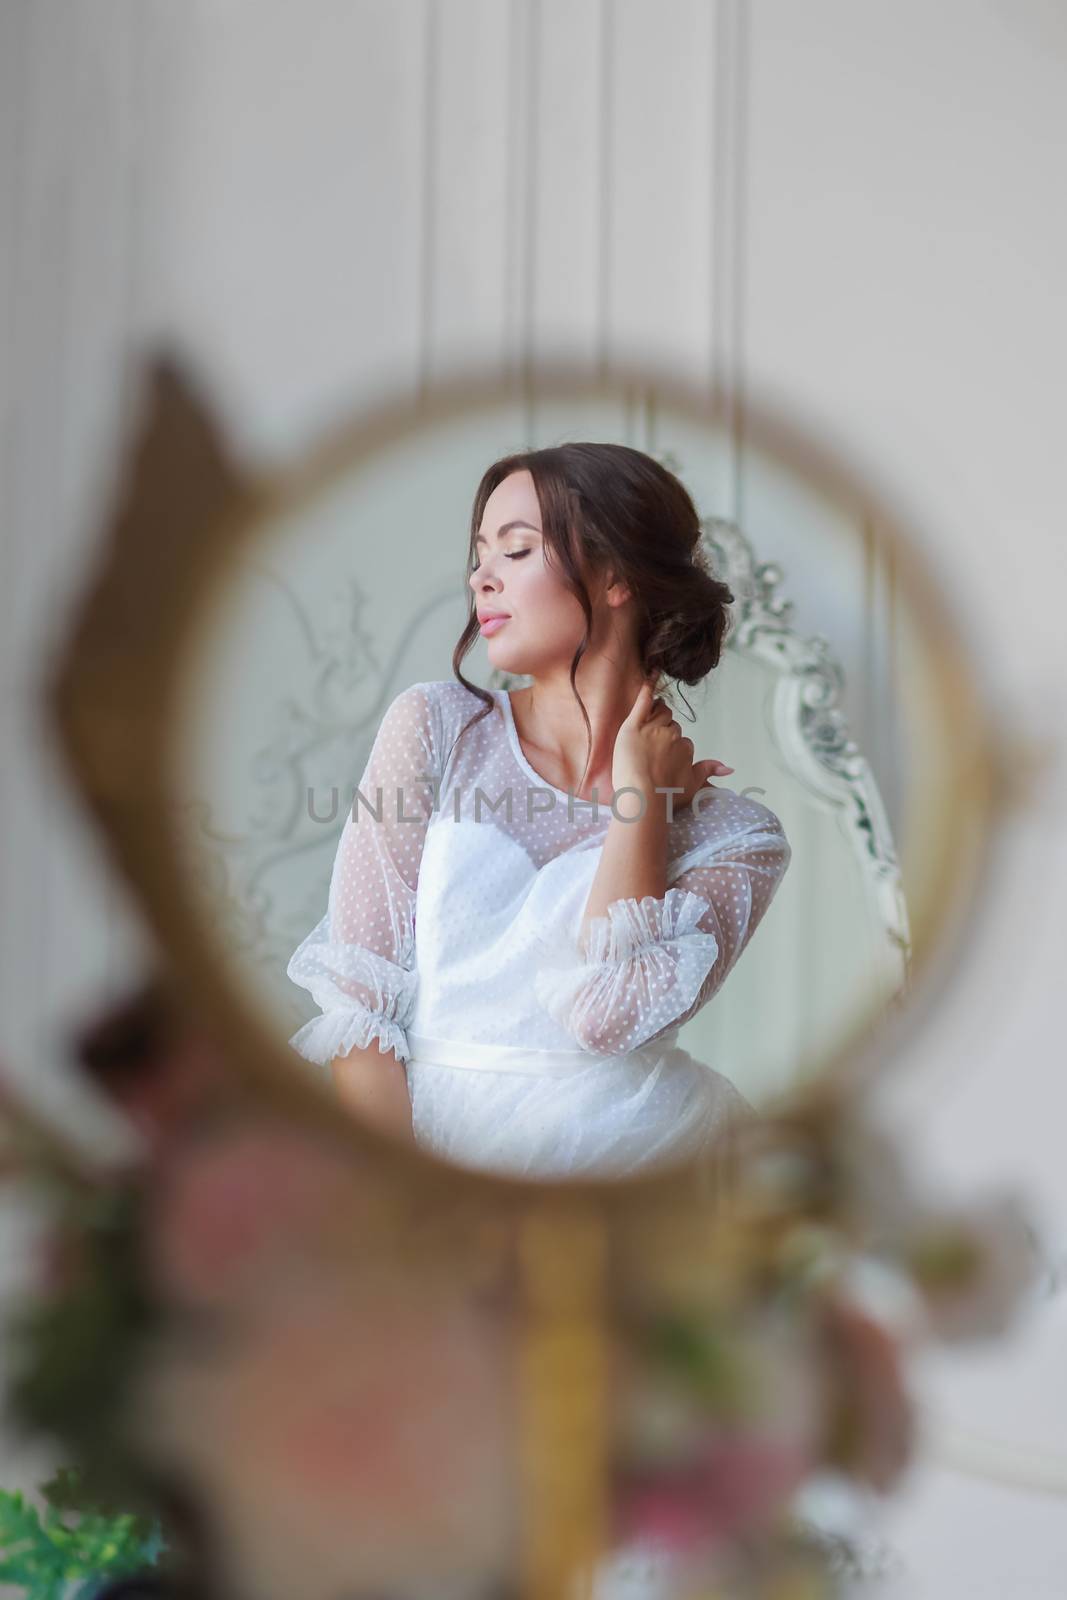 Portrait of the bride in a white wedding dress in a beautiful round mirror by galinasharapova